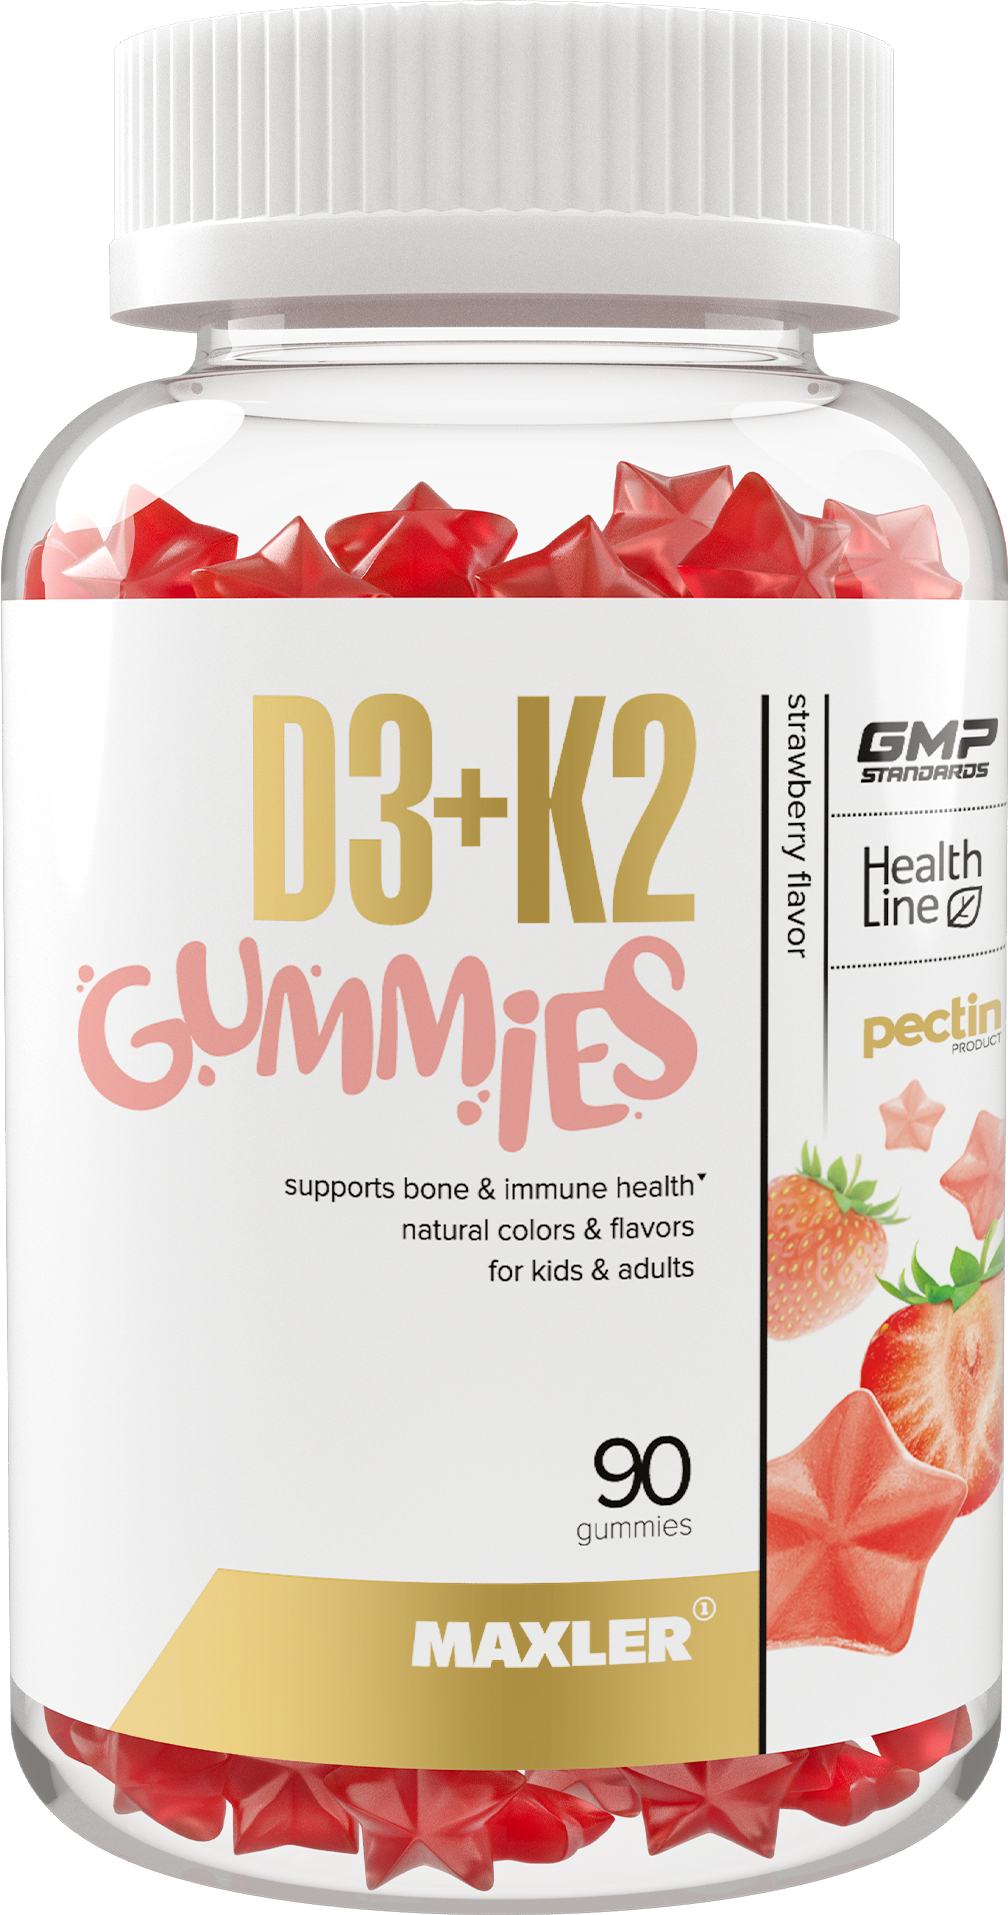 Maxler D3+K2 Gummies